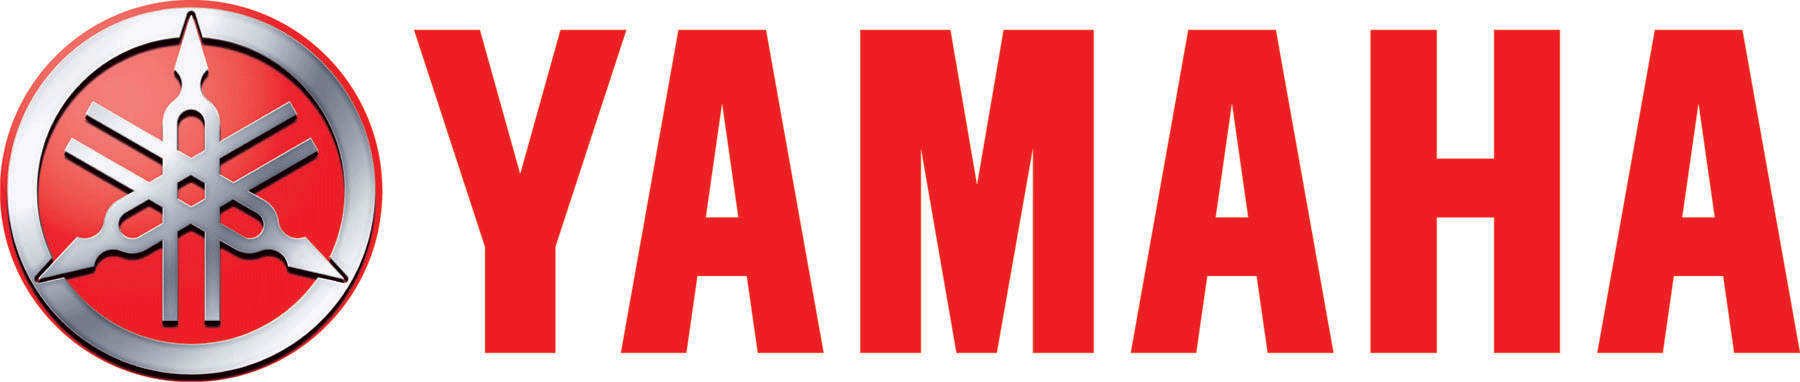 NEW-NEW-Red-Yamaha-logo[1]